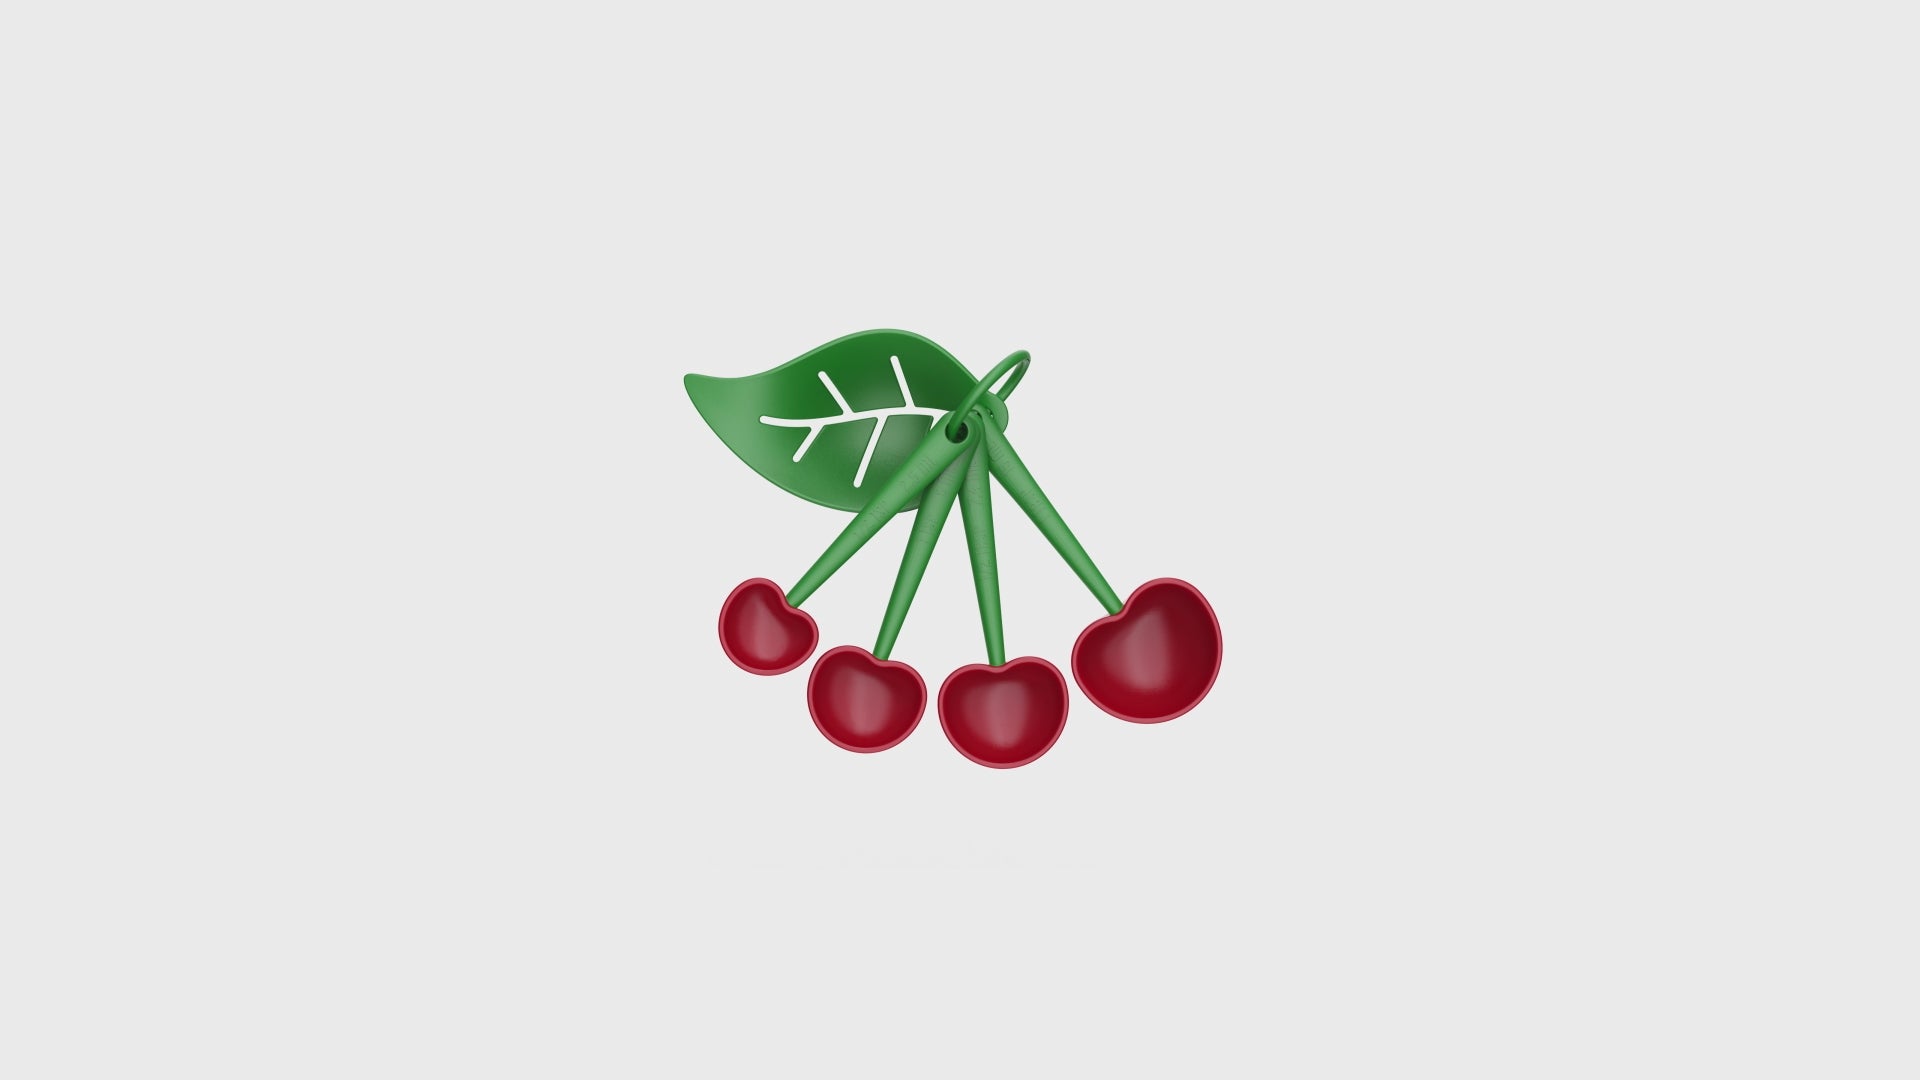 OTOTO Mon Cherry Measuring Spoons, Green/Red